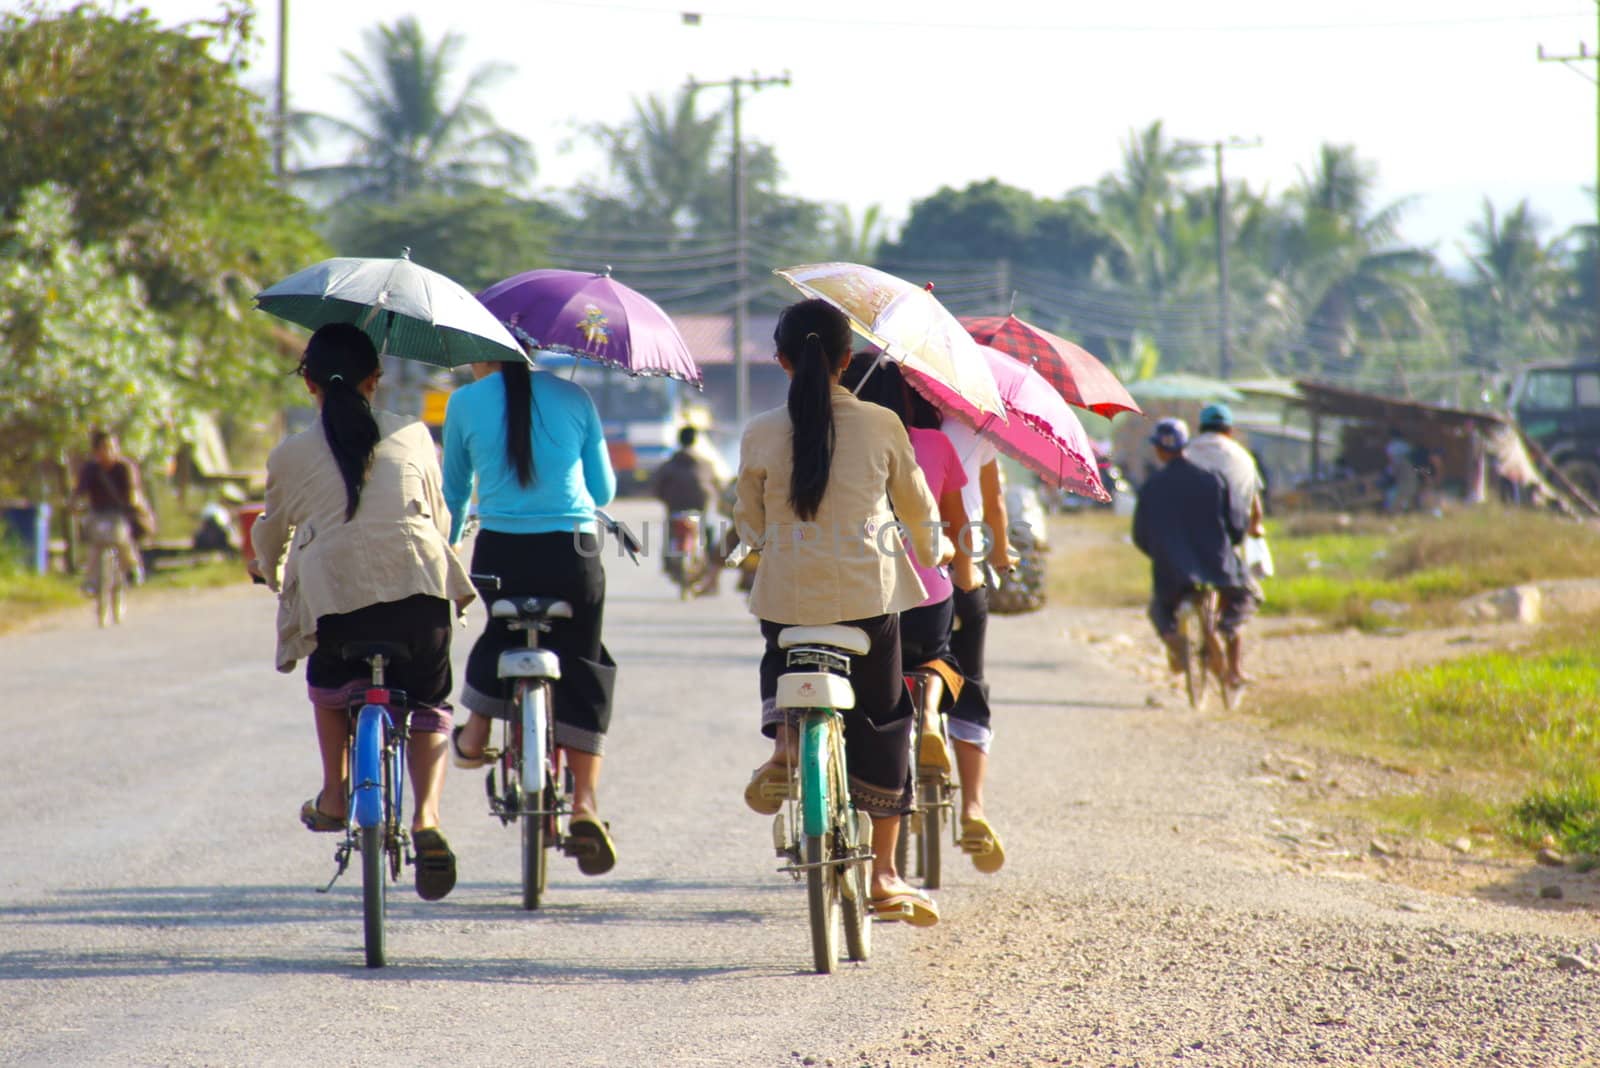 Asian women riding their bicycles under umbrellas